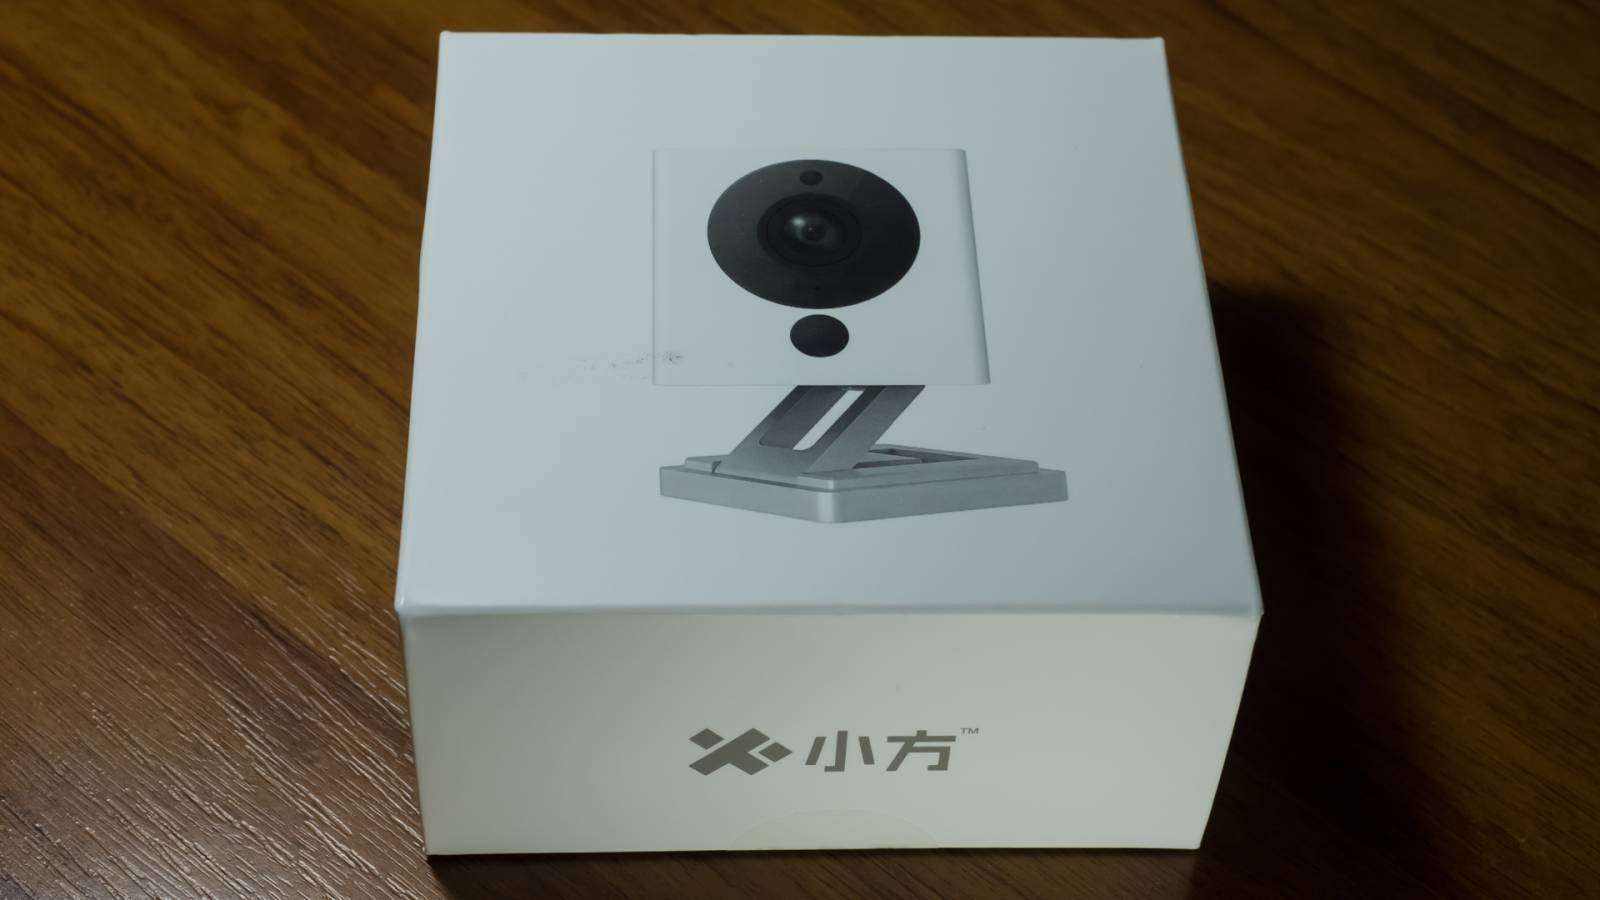 GearBest: Xiaomi Little Square Smart 1080P WiFi IP Camera - обзор, настройка, сценарии